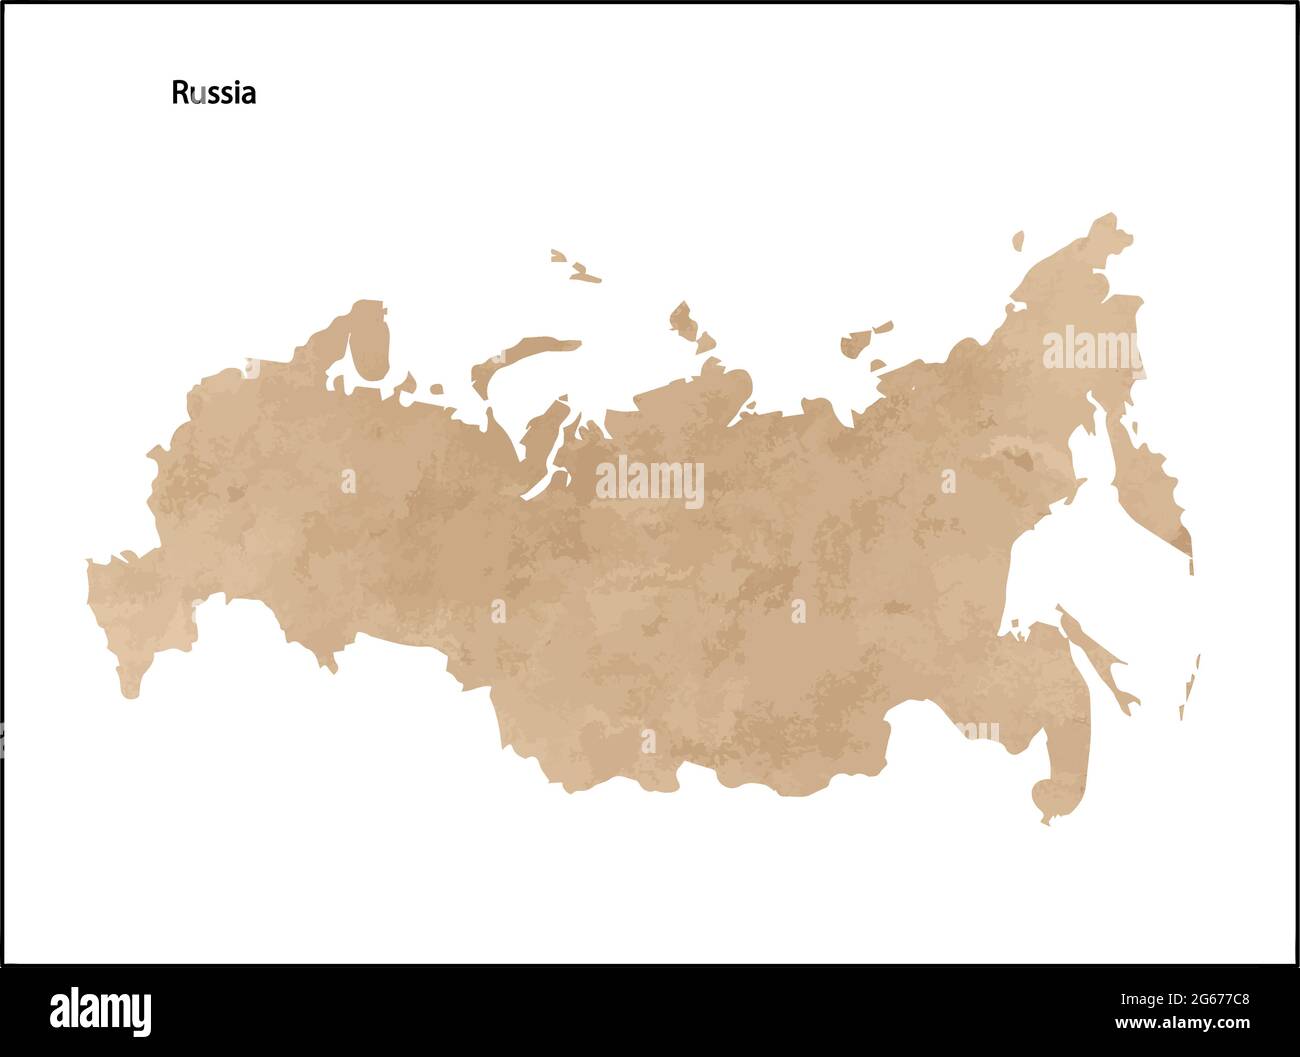 Alte Vintage Papier strukturierte Karte von Russland Land - Vektor-Illustration Stock Vektor